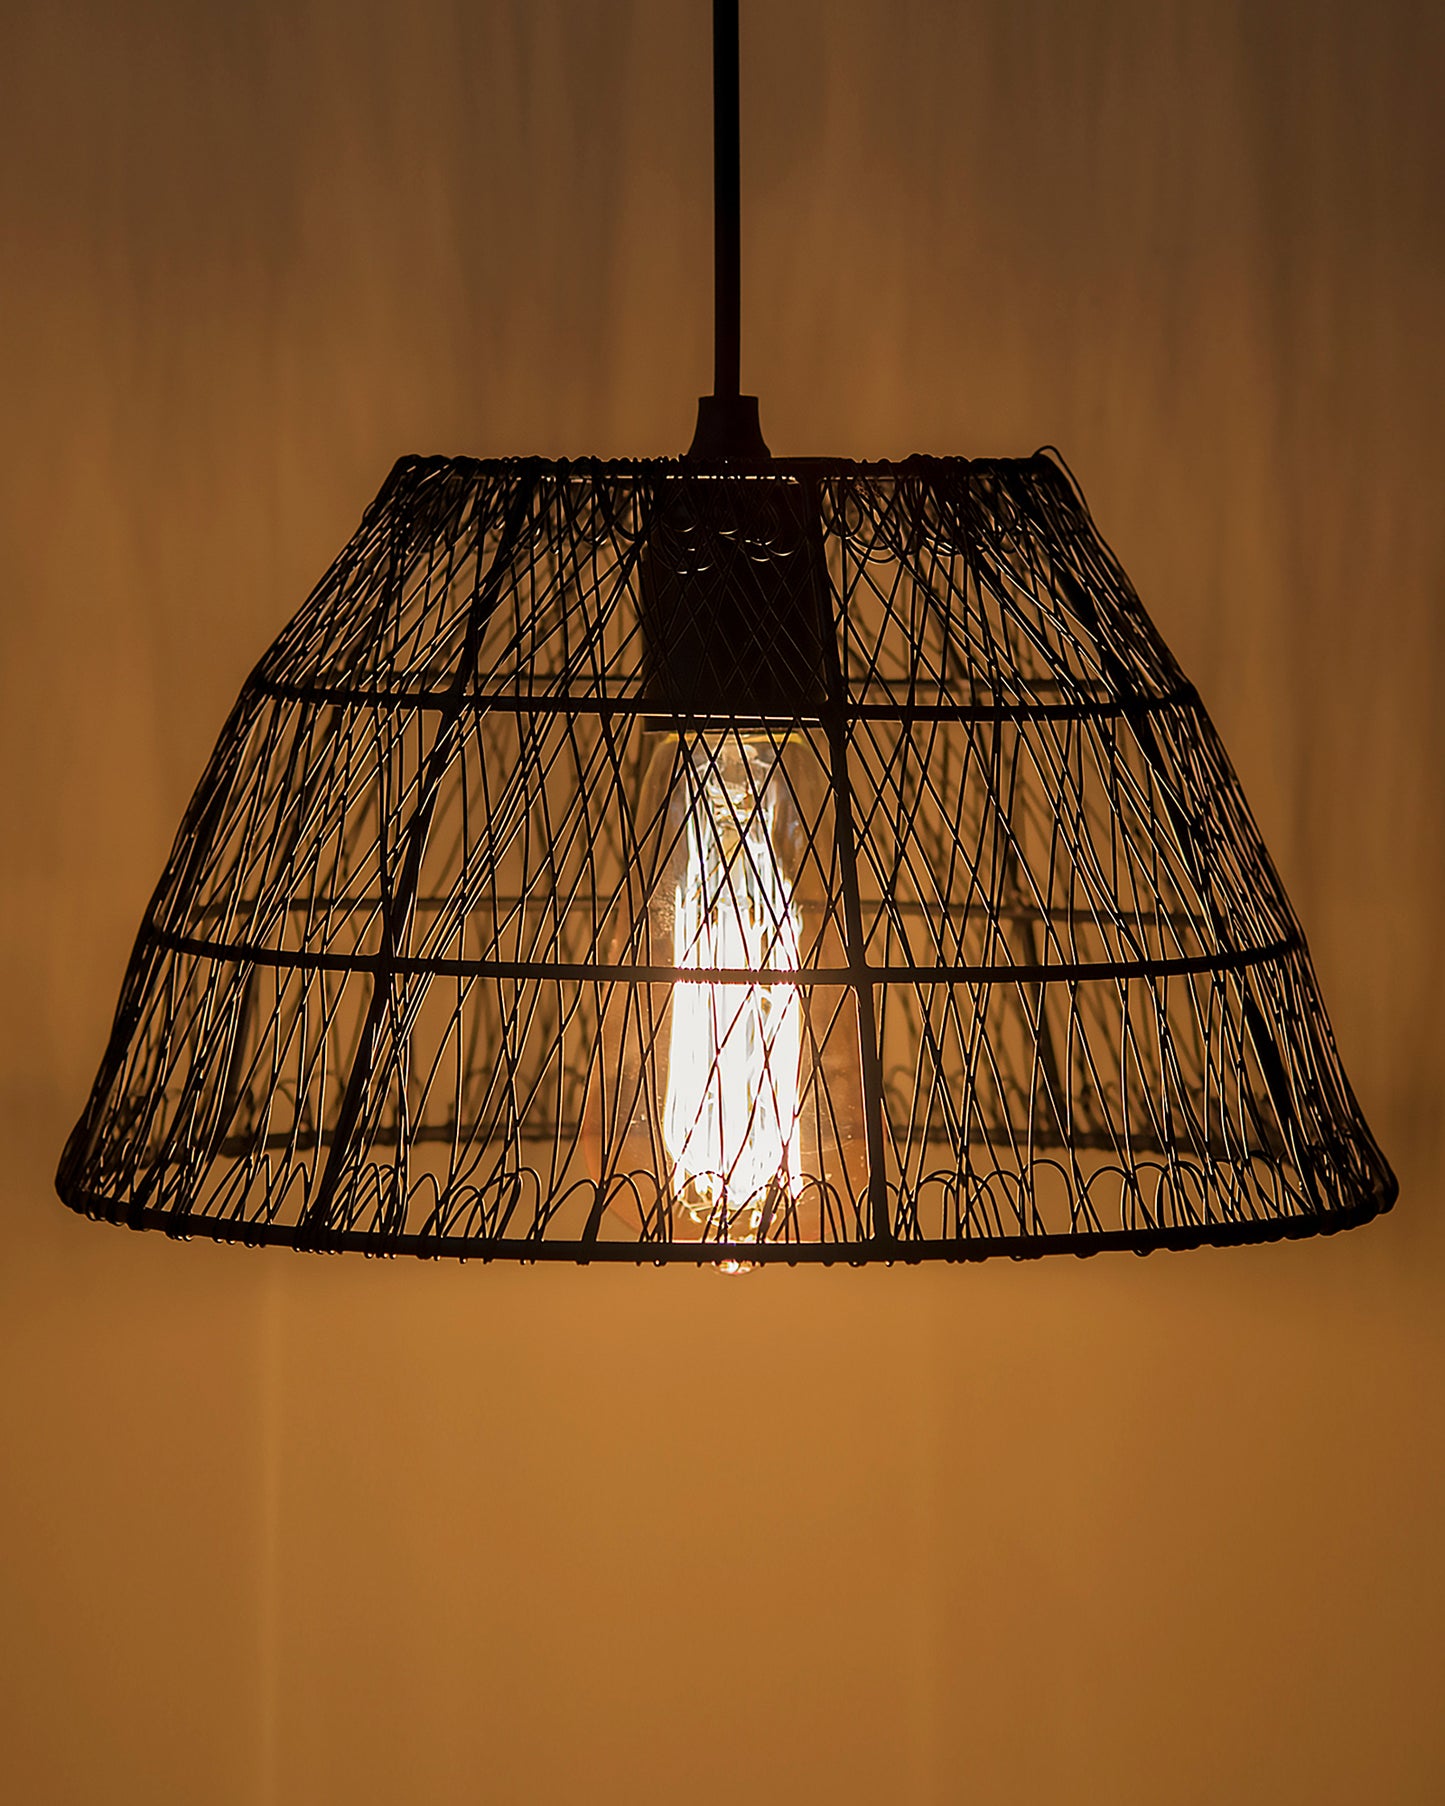 Metal Wire Mesh Lamp shade hanging light, ceiling pendant light, E27 Antique Black